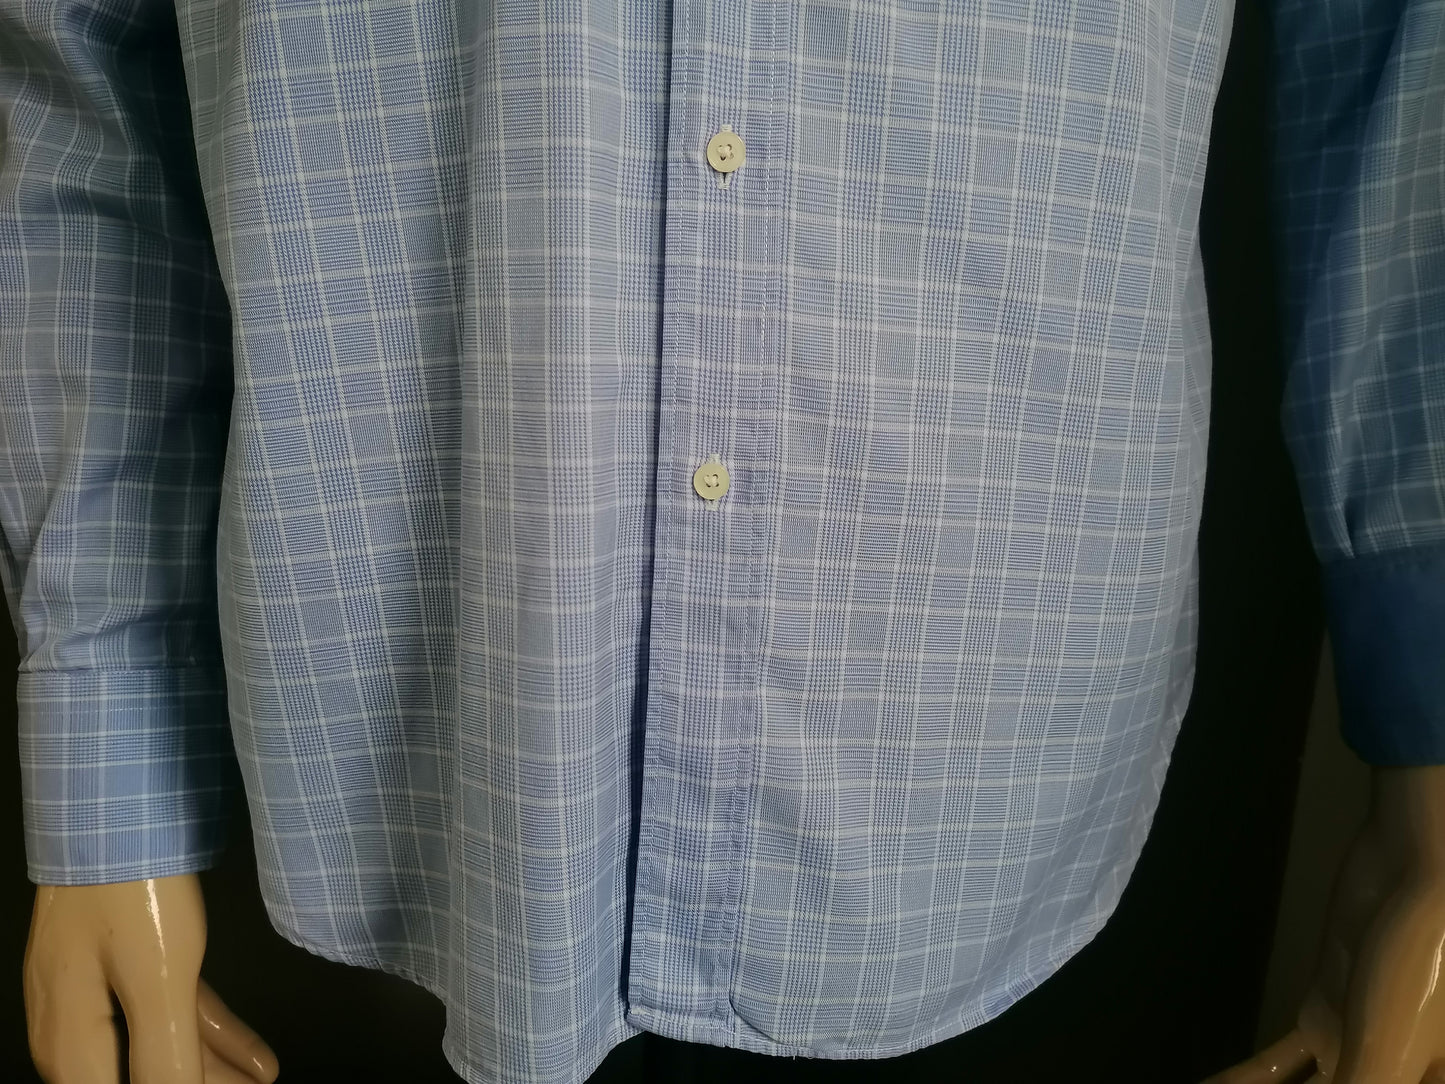 Camisa de Zara Man. Blanco azul a cuadros. Tamaño 42 / L. Fit a medida.